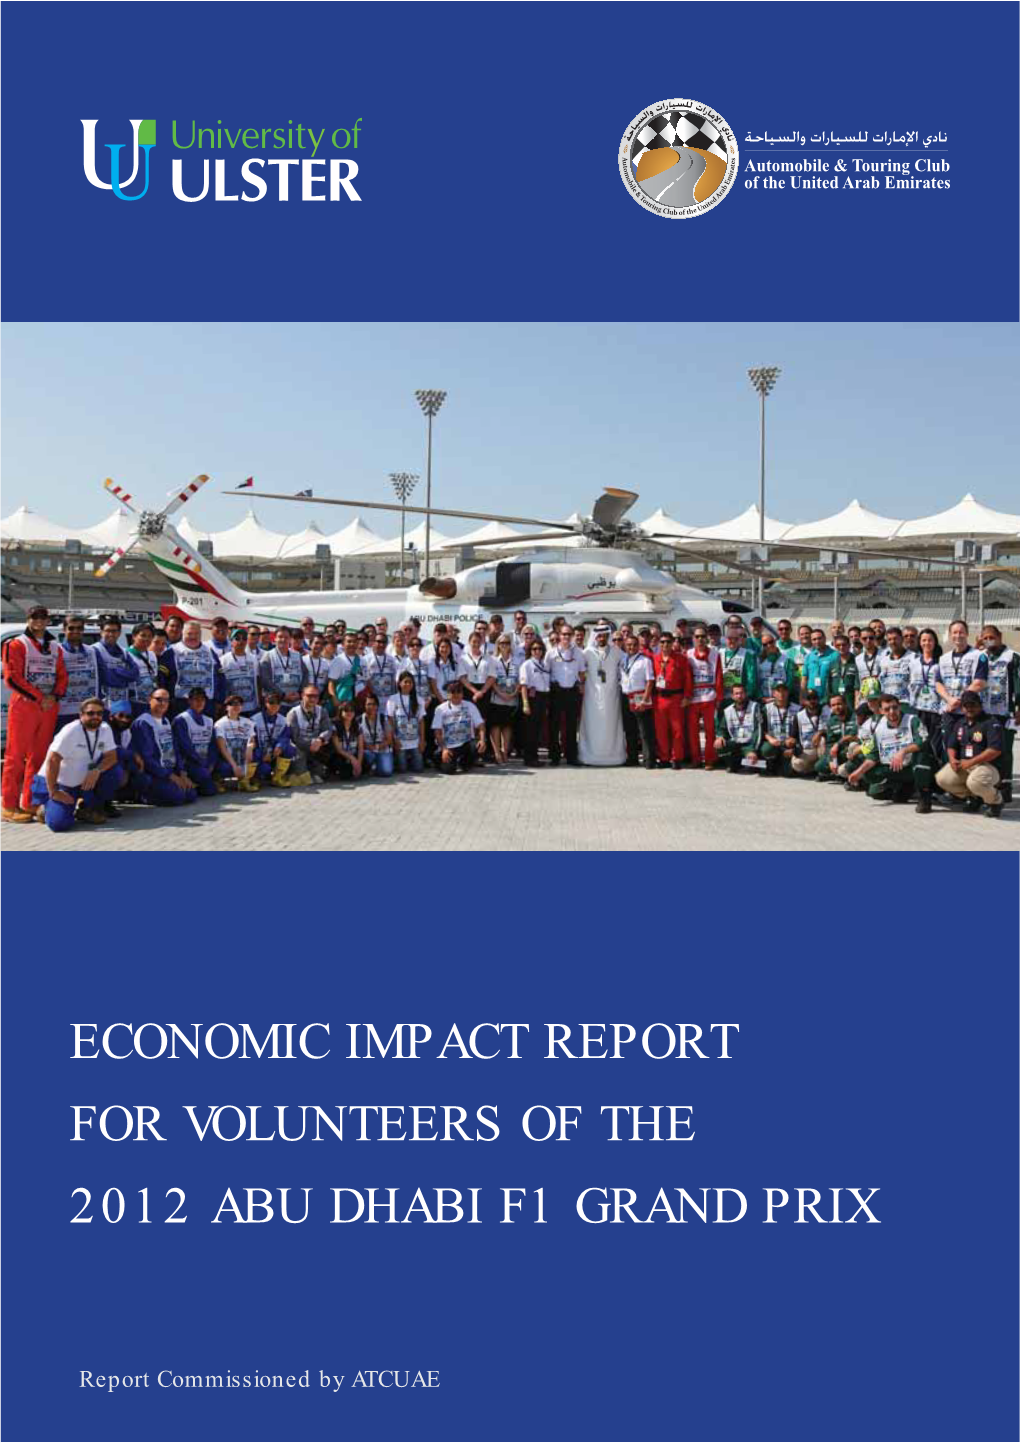 Economic Impact Report for Volunteers of the 2012 Abu Dhabi F1 Grand Prix